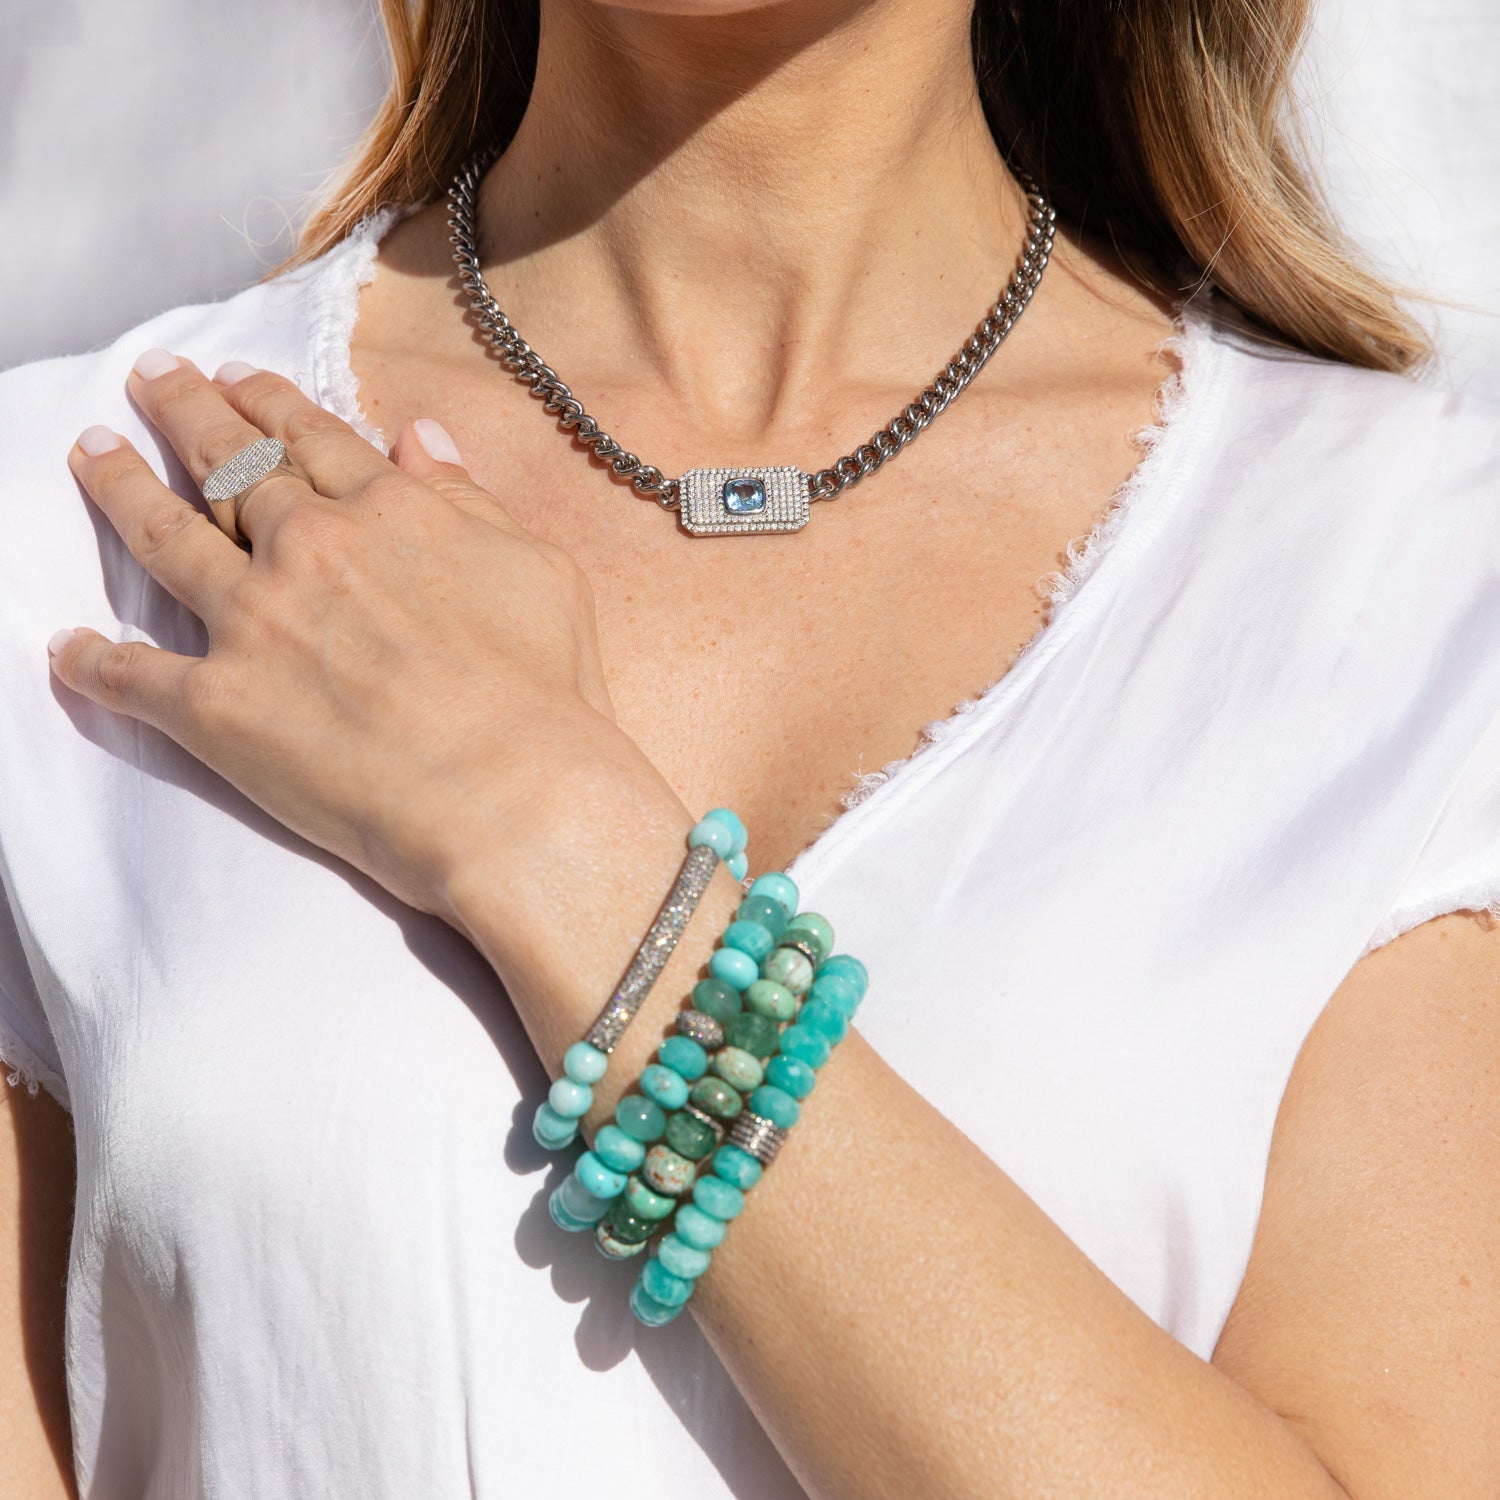 Aquamarine & Pave Diamond Pendant Chain Necklace - 16"  N0002879 - TBird